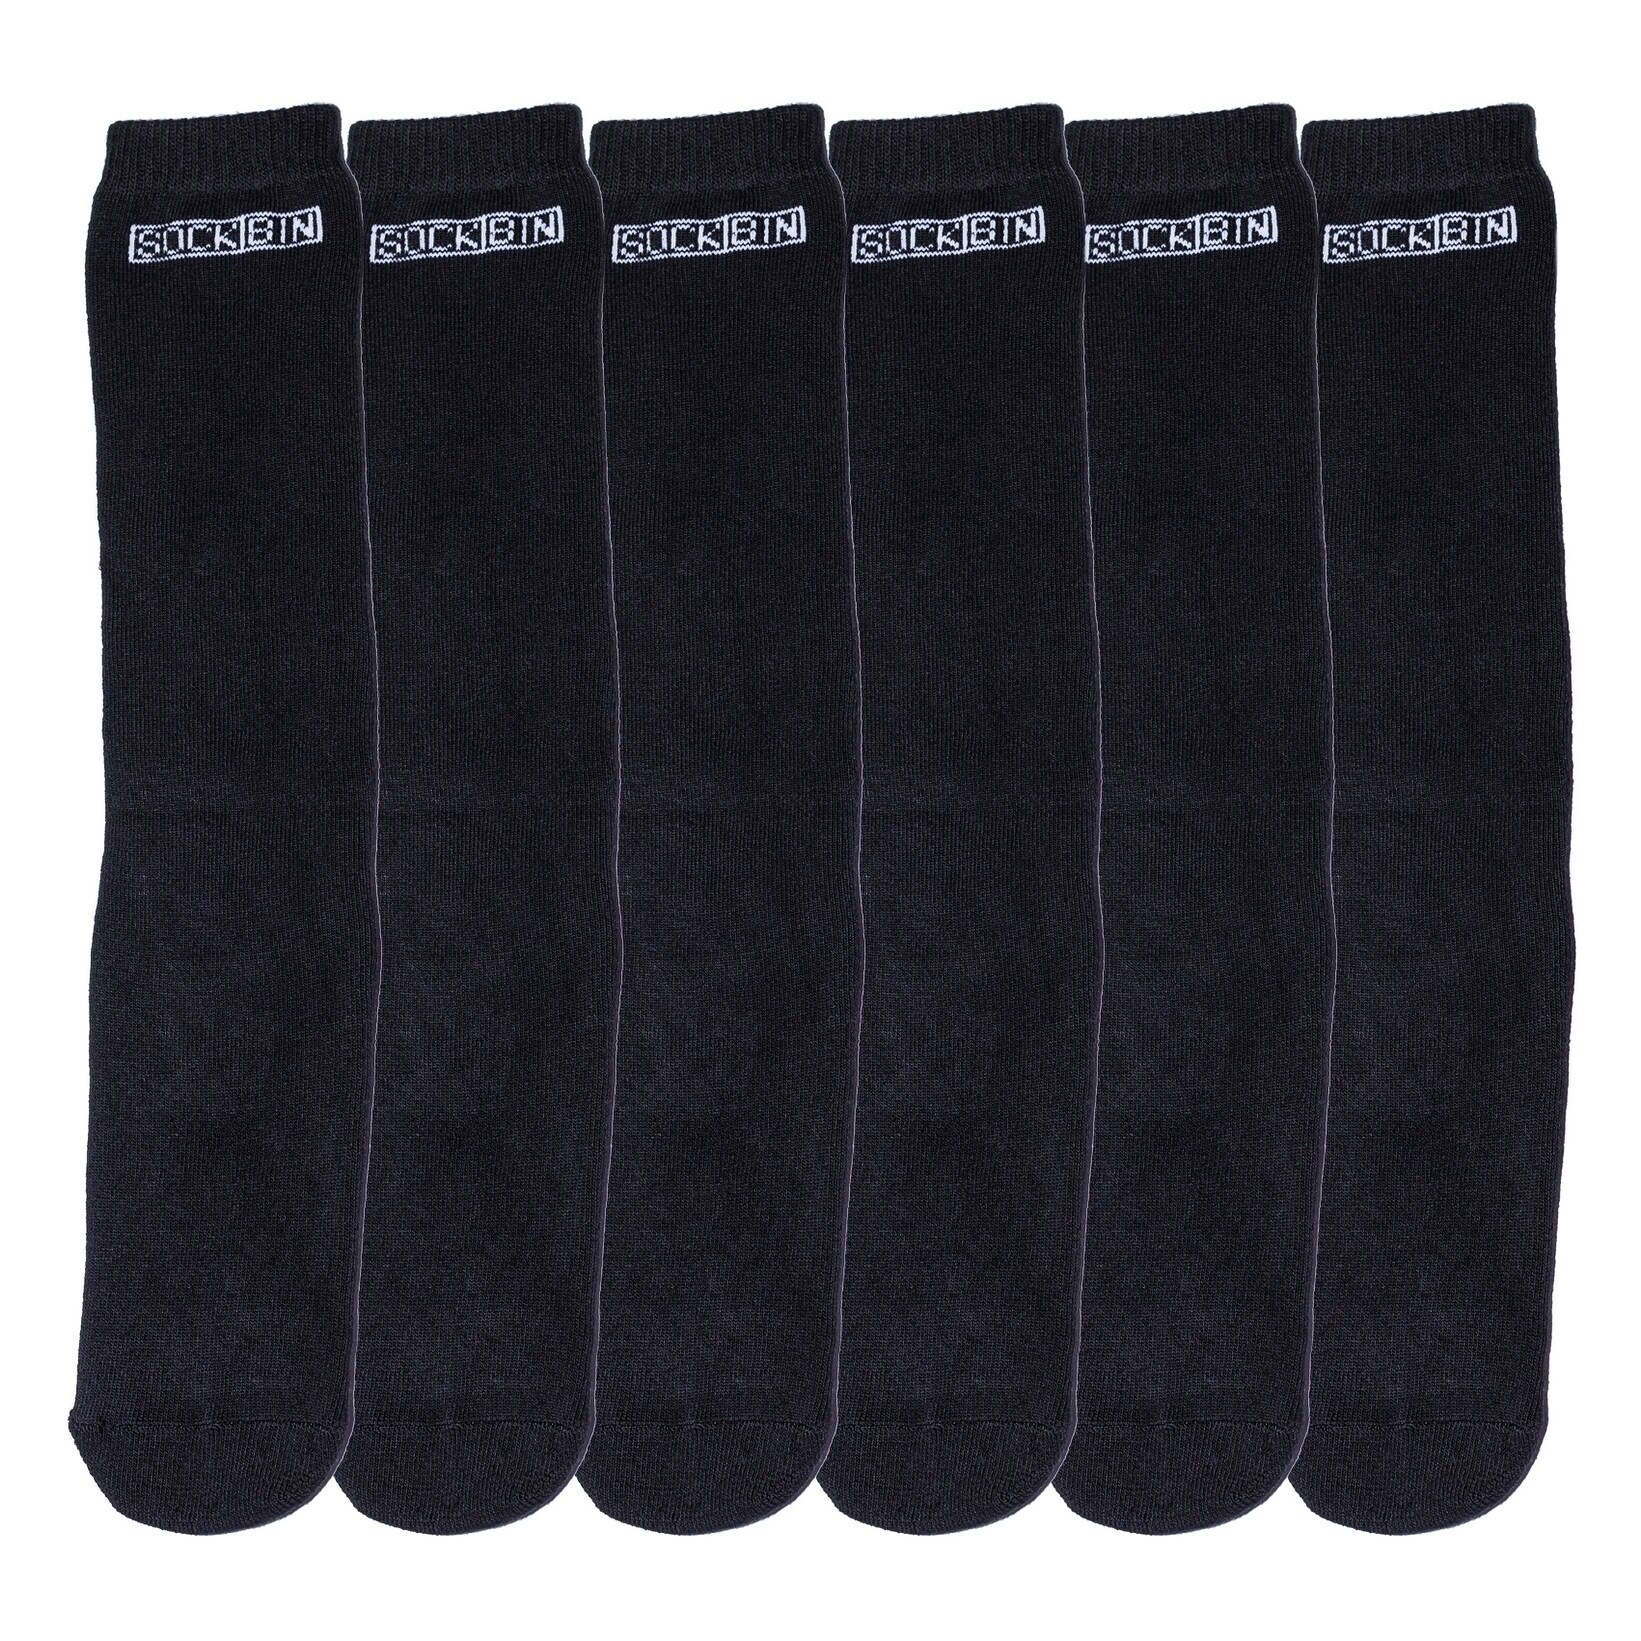 slipper socks with grippers in bulk